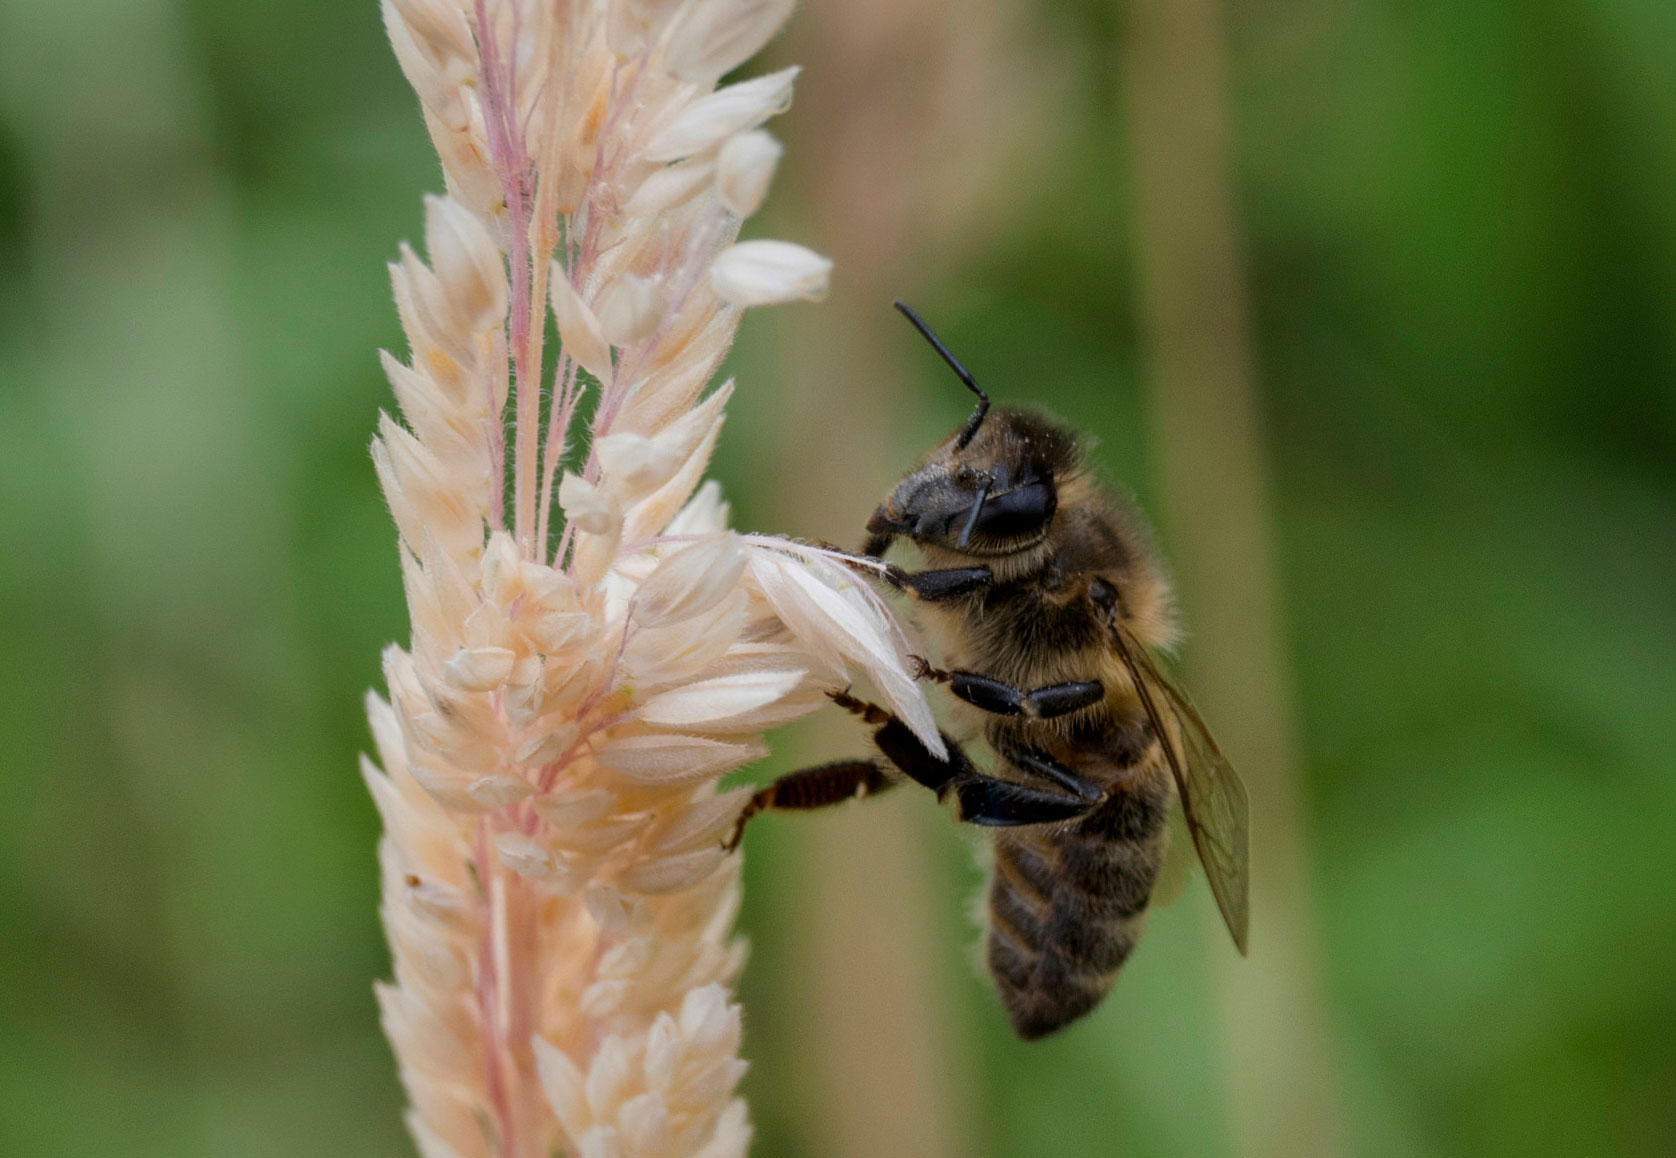 Bee searching for nectar. Image: CC, Paul van de Velde